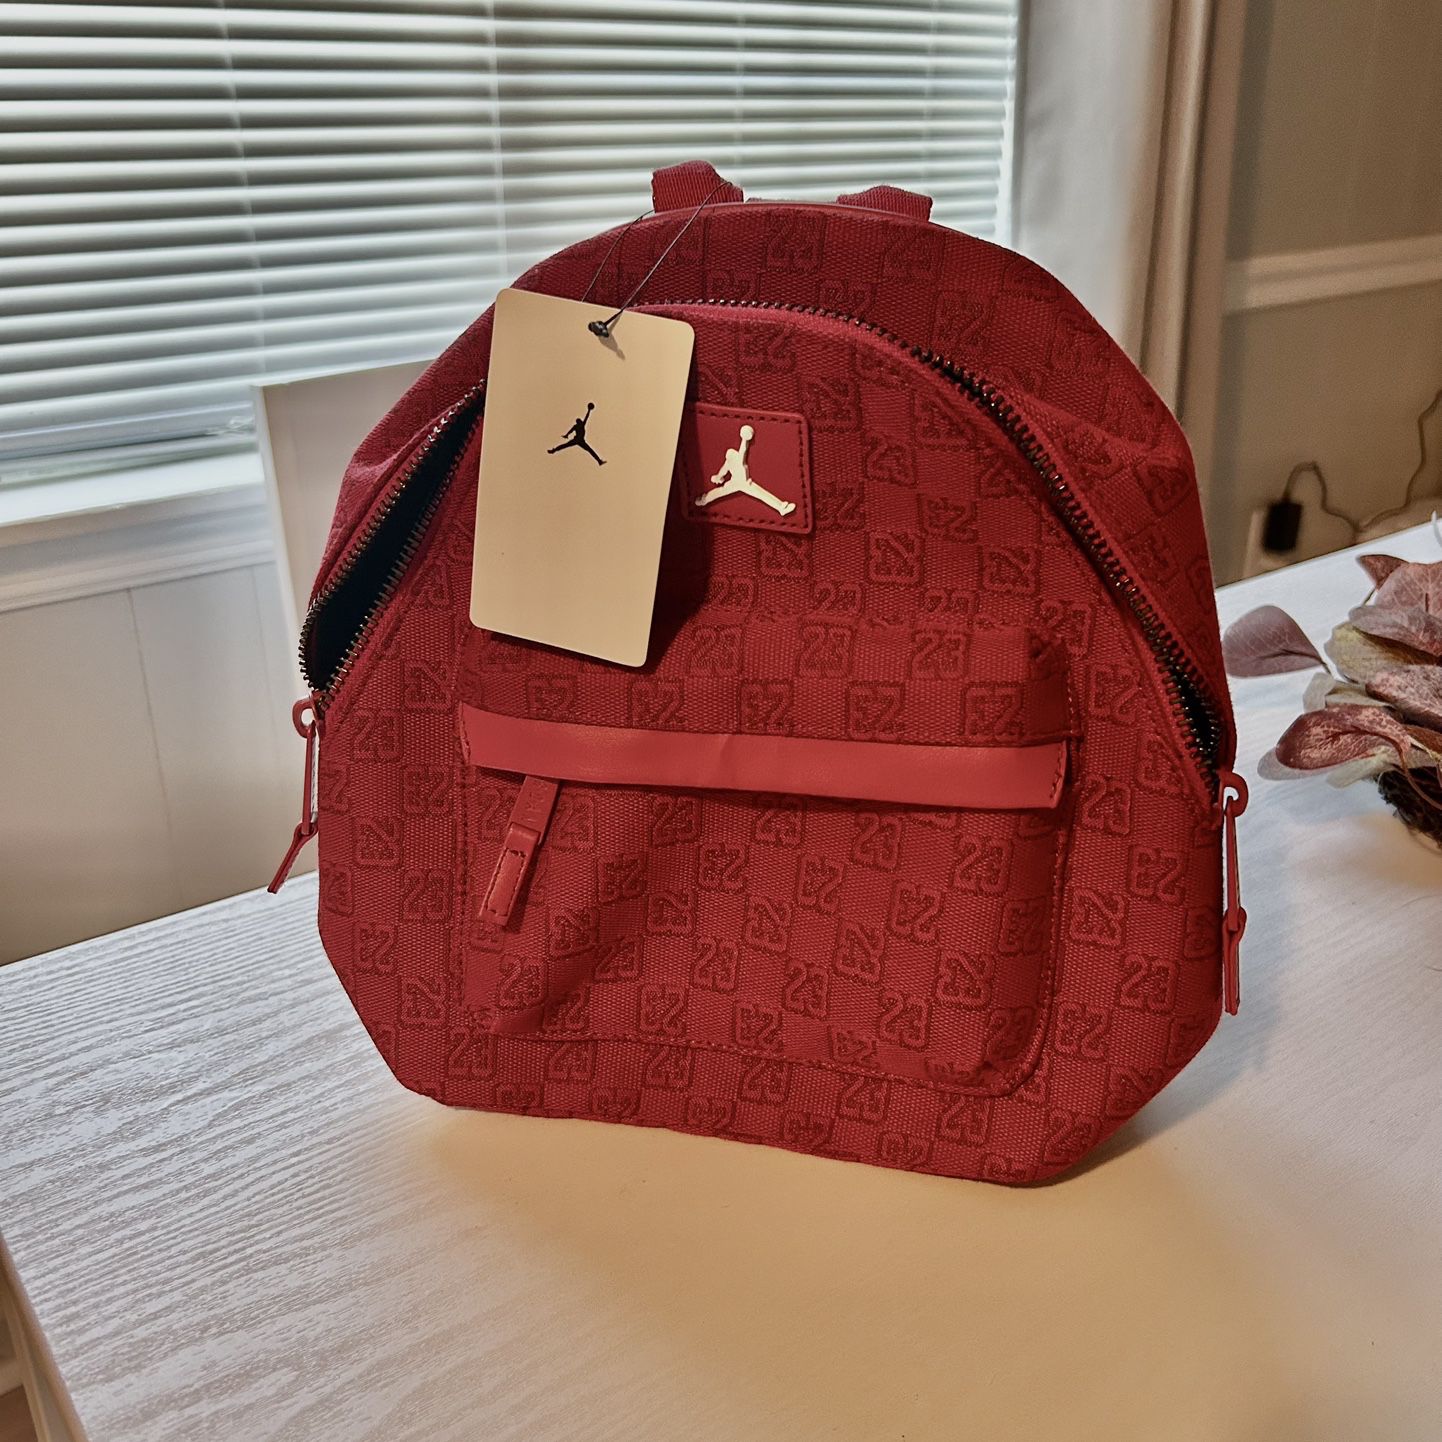 Jordan mini backpack